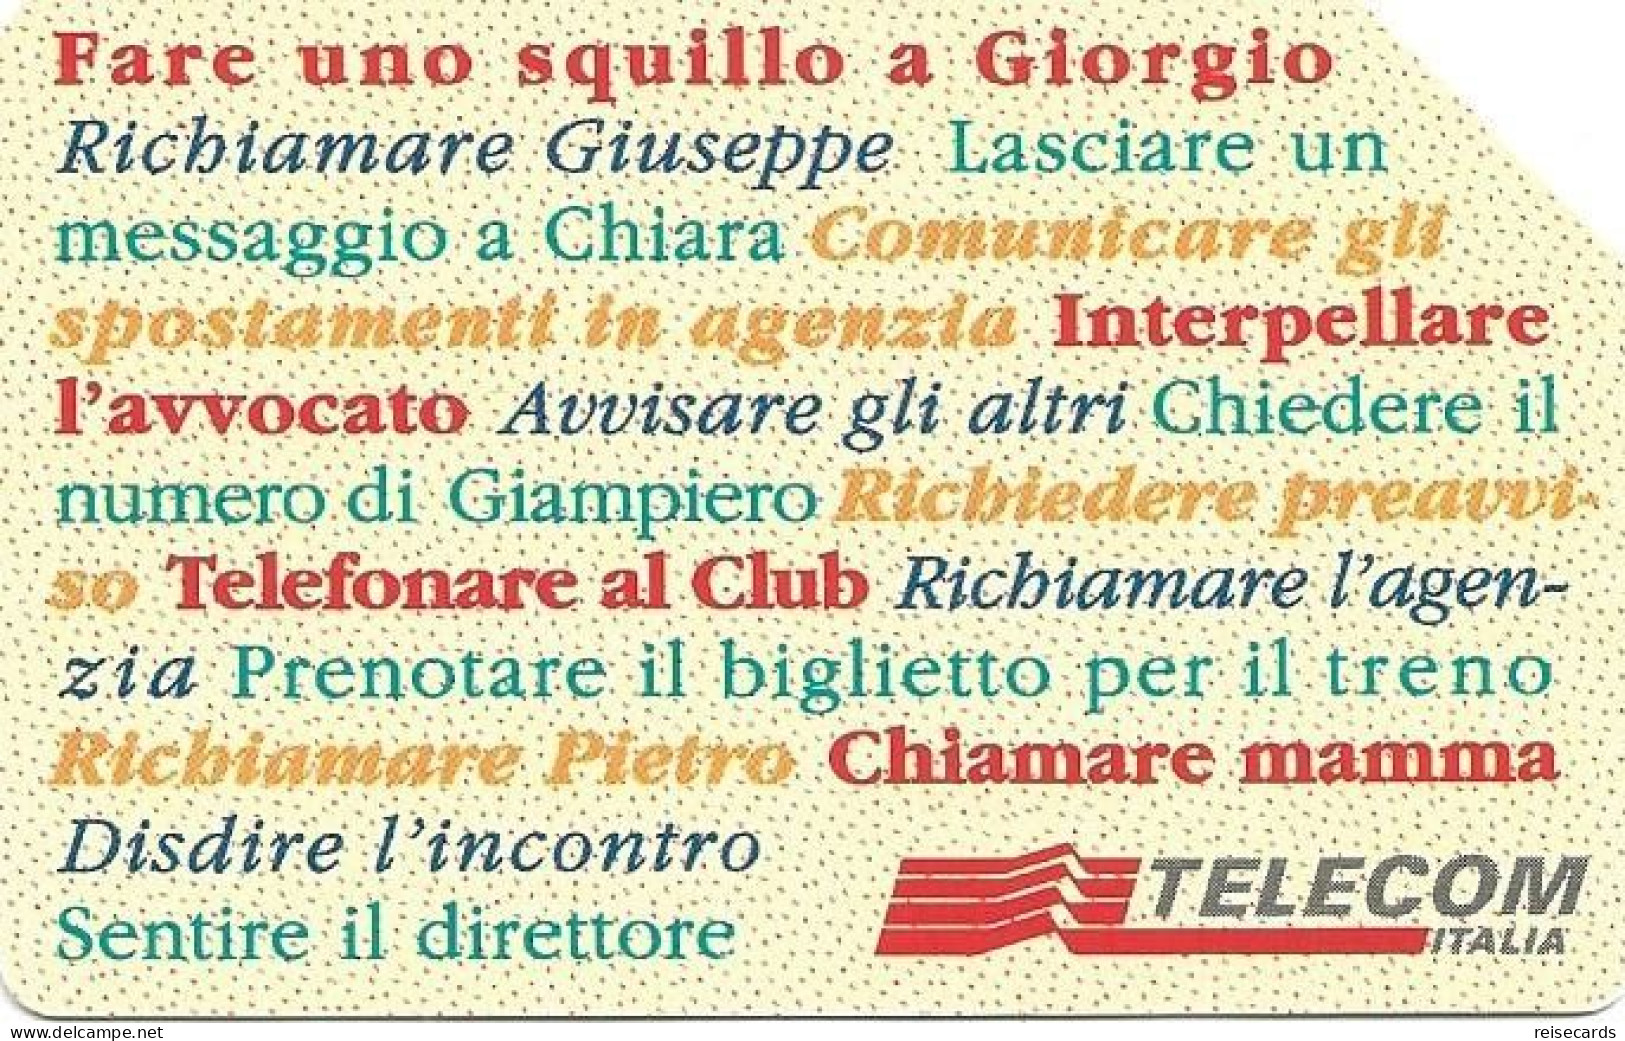 Italy: Telecom Italia - Storie Di Vita Quotidiana - Públicas  Publicitarias